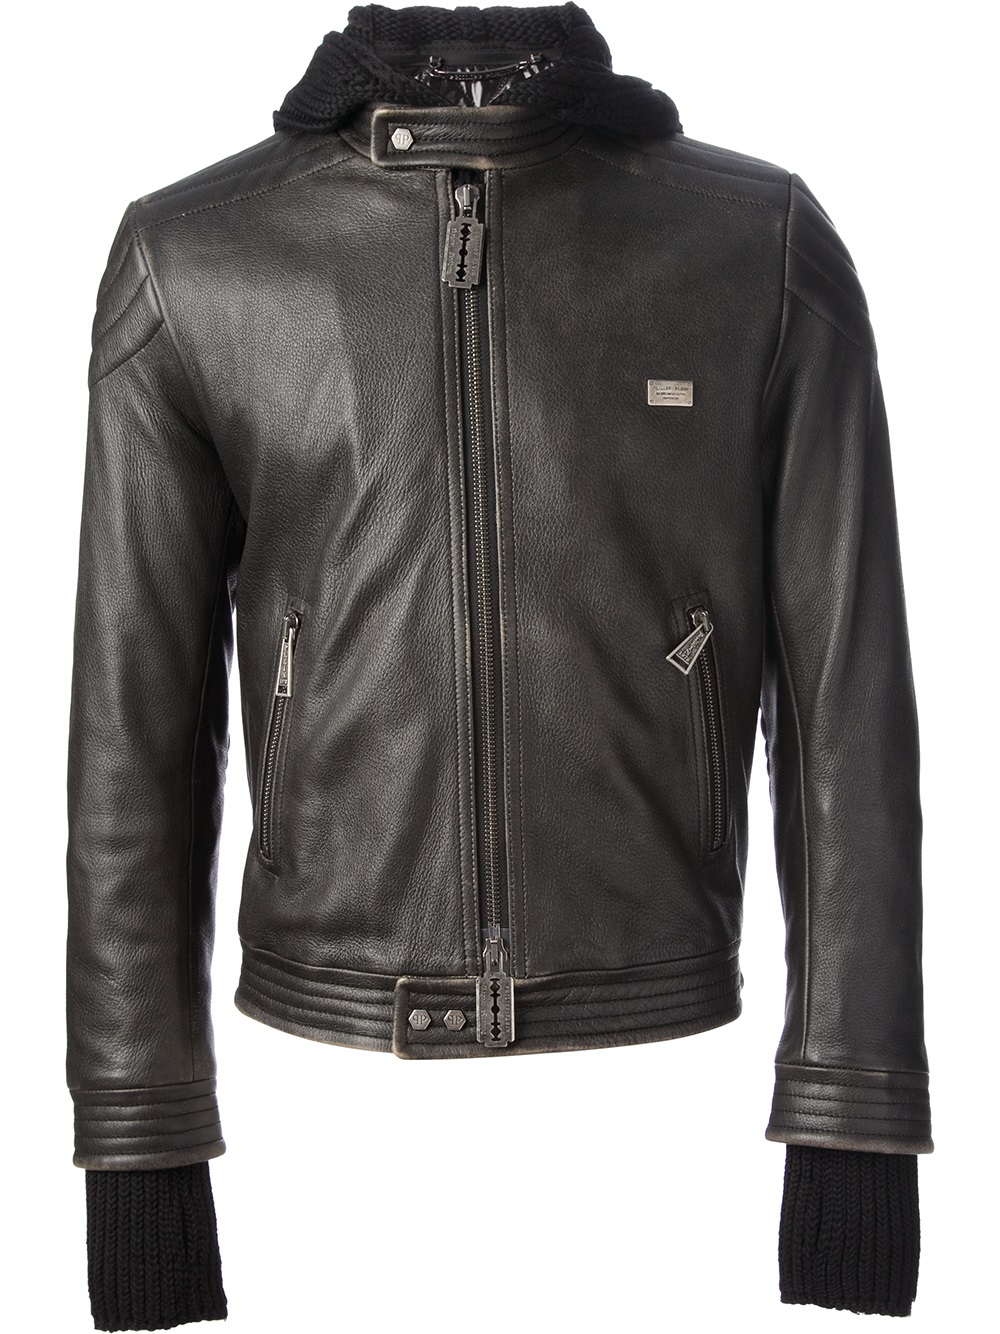 Philipp plein Stud Skull Leather Jacket in Black for Men | Lyst